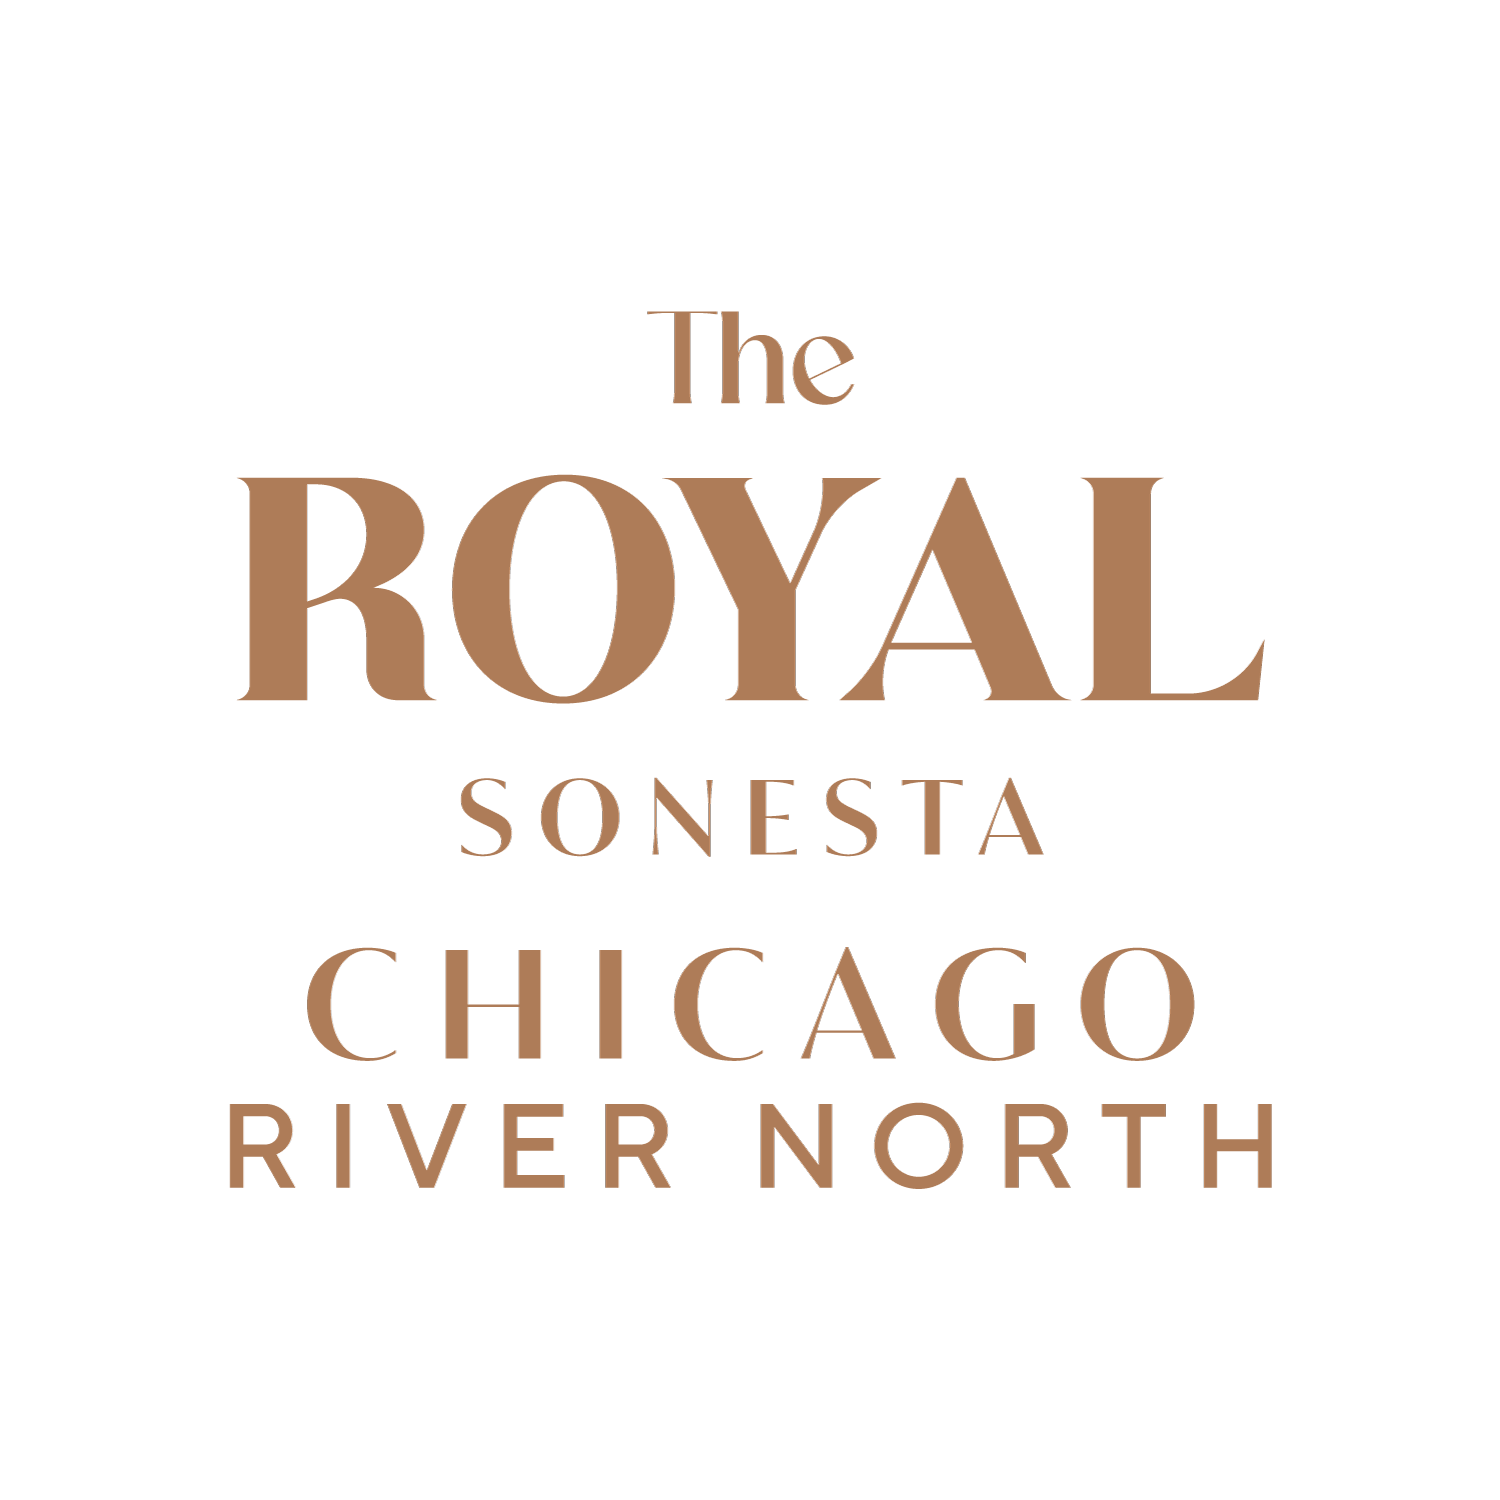 The Royal Sonesta Chicago River North